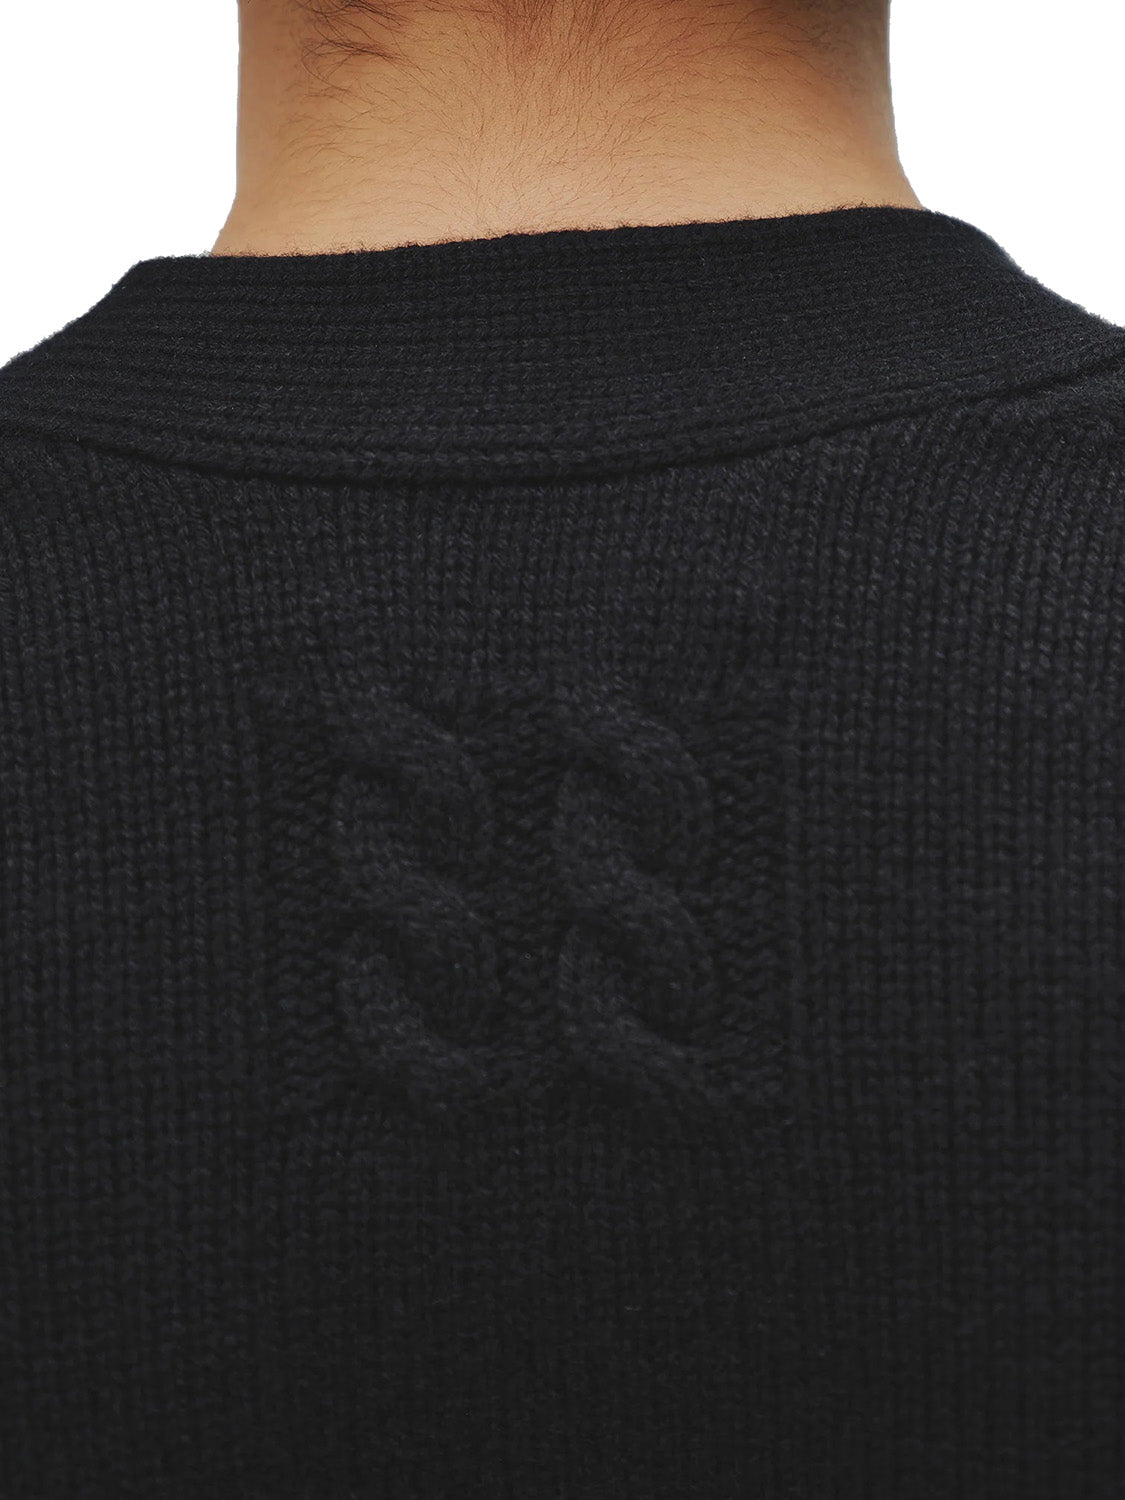 Caldorf Sweater in Black